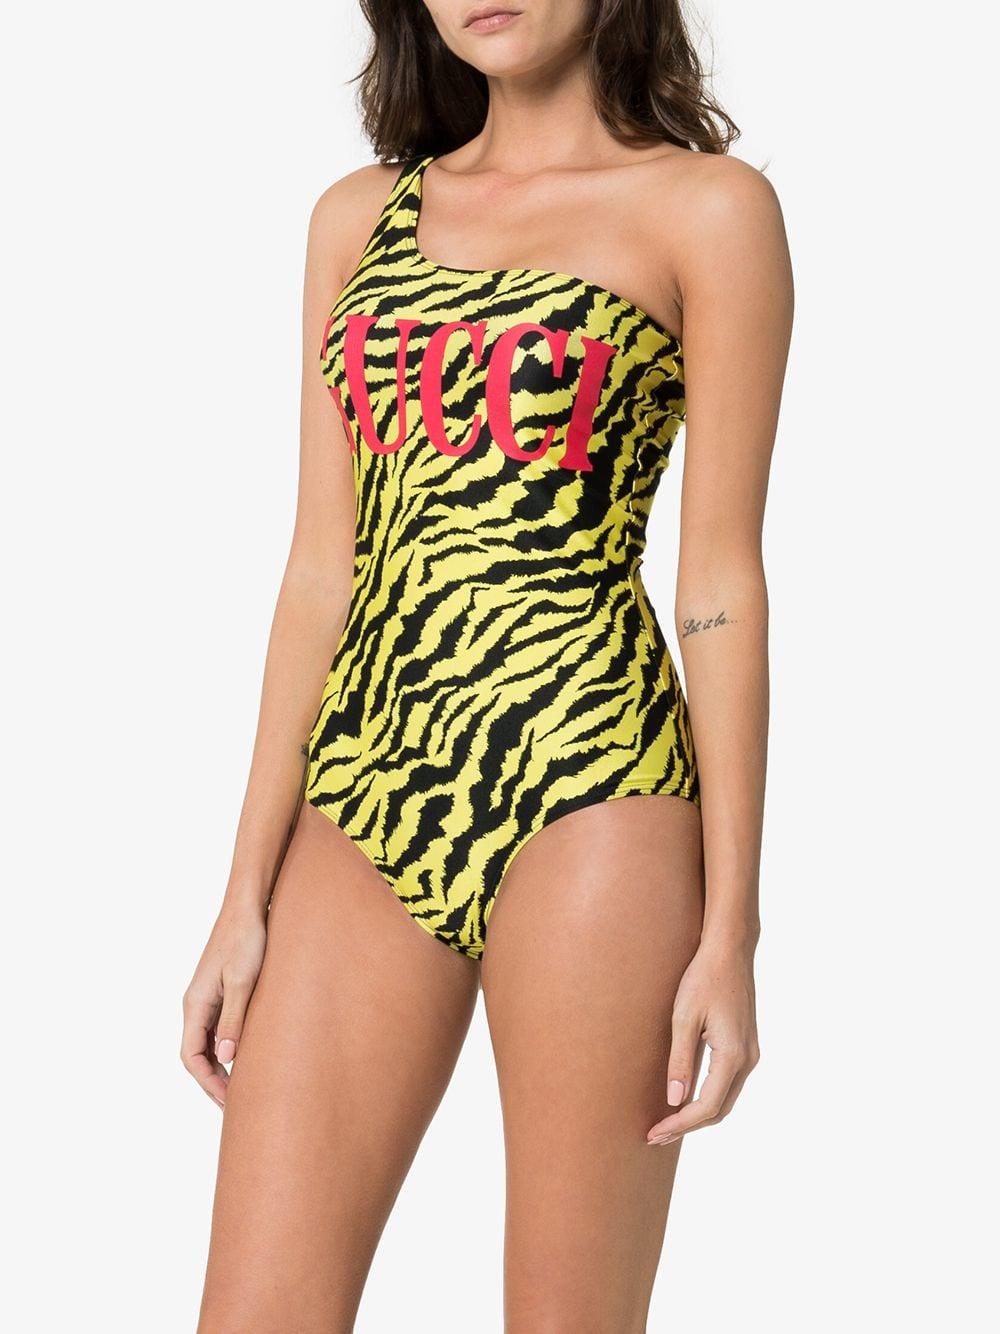 Sparkling Swimsuit With Zebra Print 